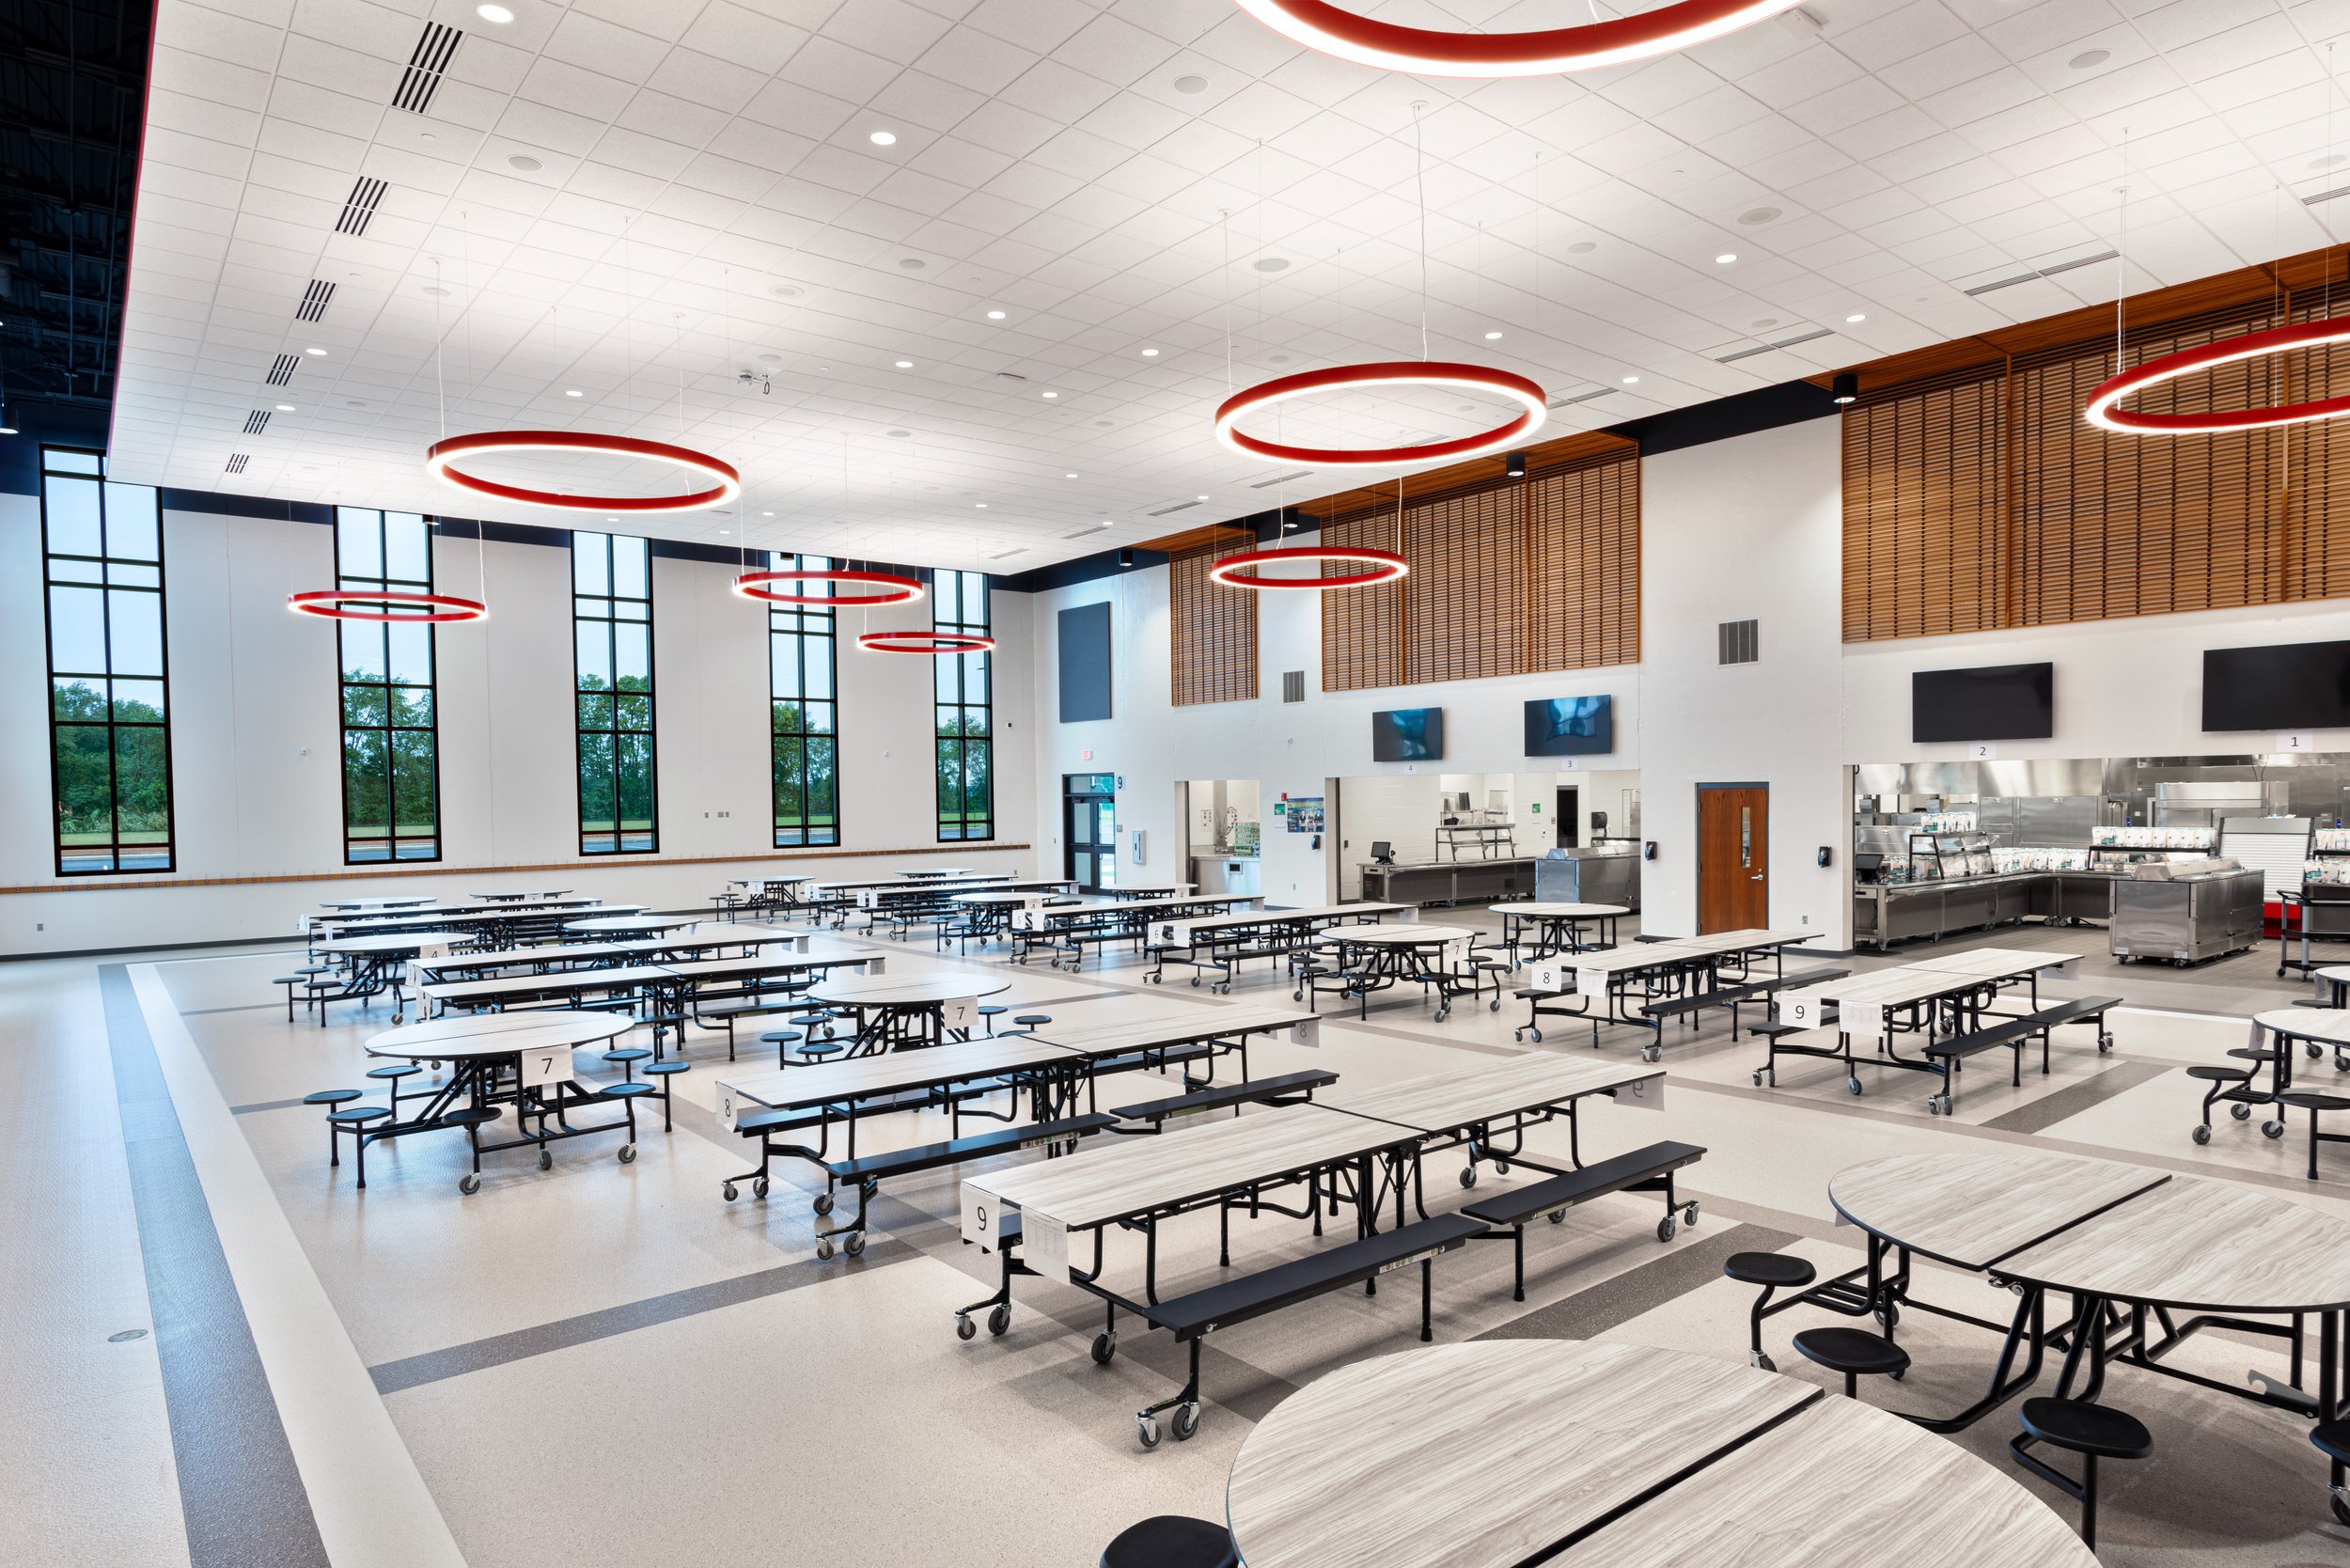 Interior photography of a school canteen.